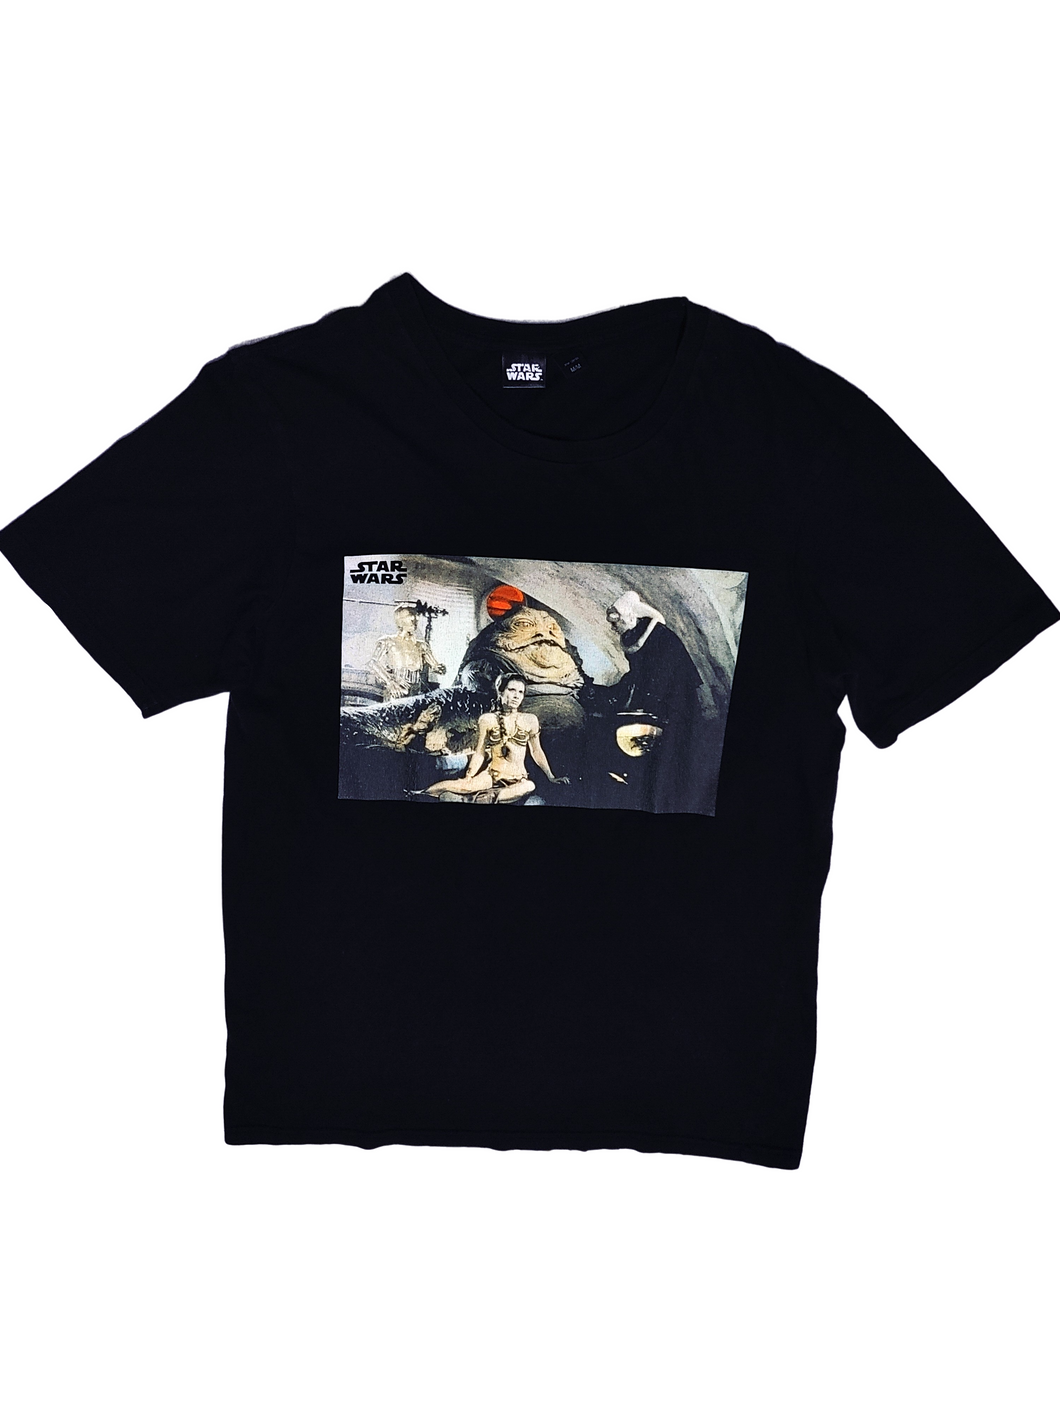 00s Star Wars T-Shirt - Size M